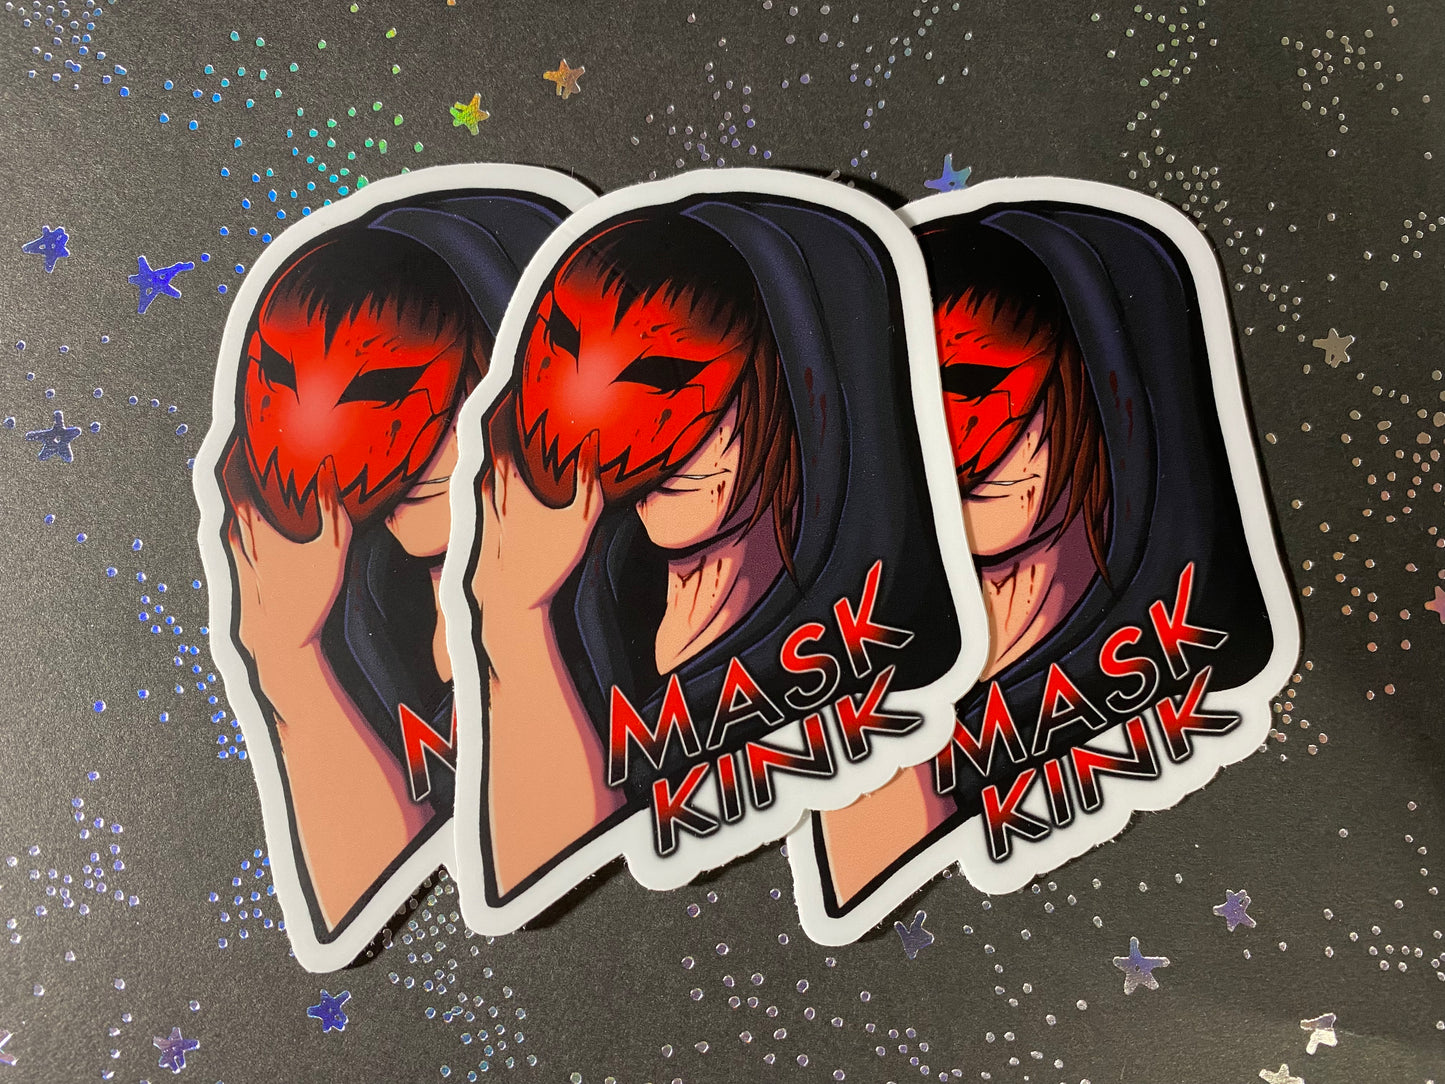 Mask Kink Original 4” Vinyl Sticker